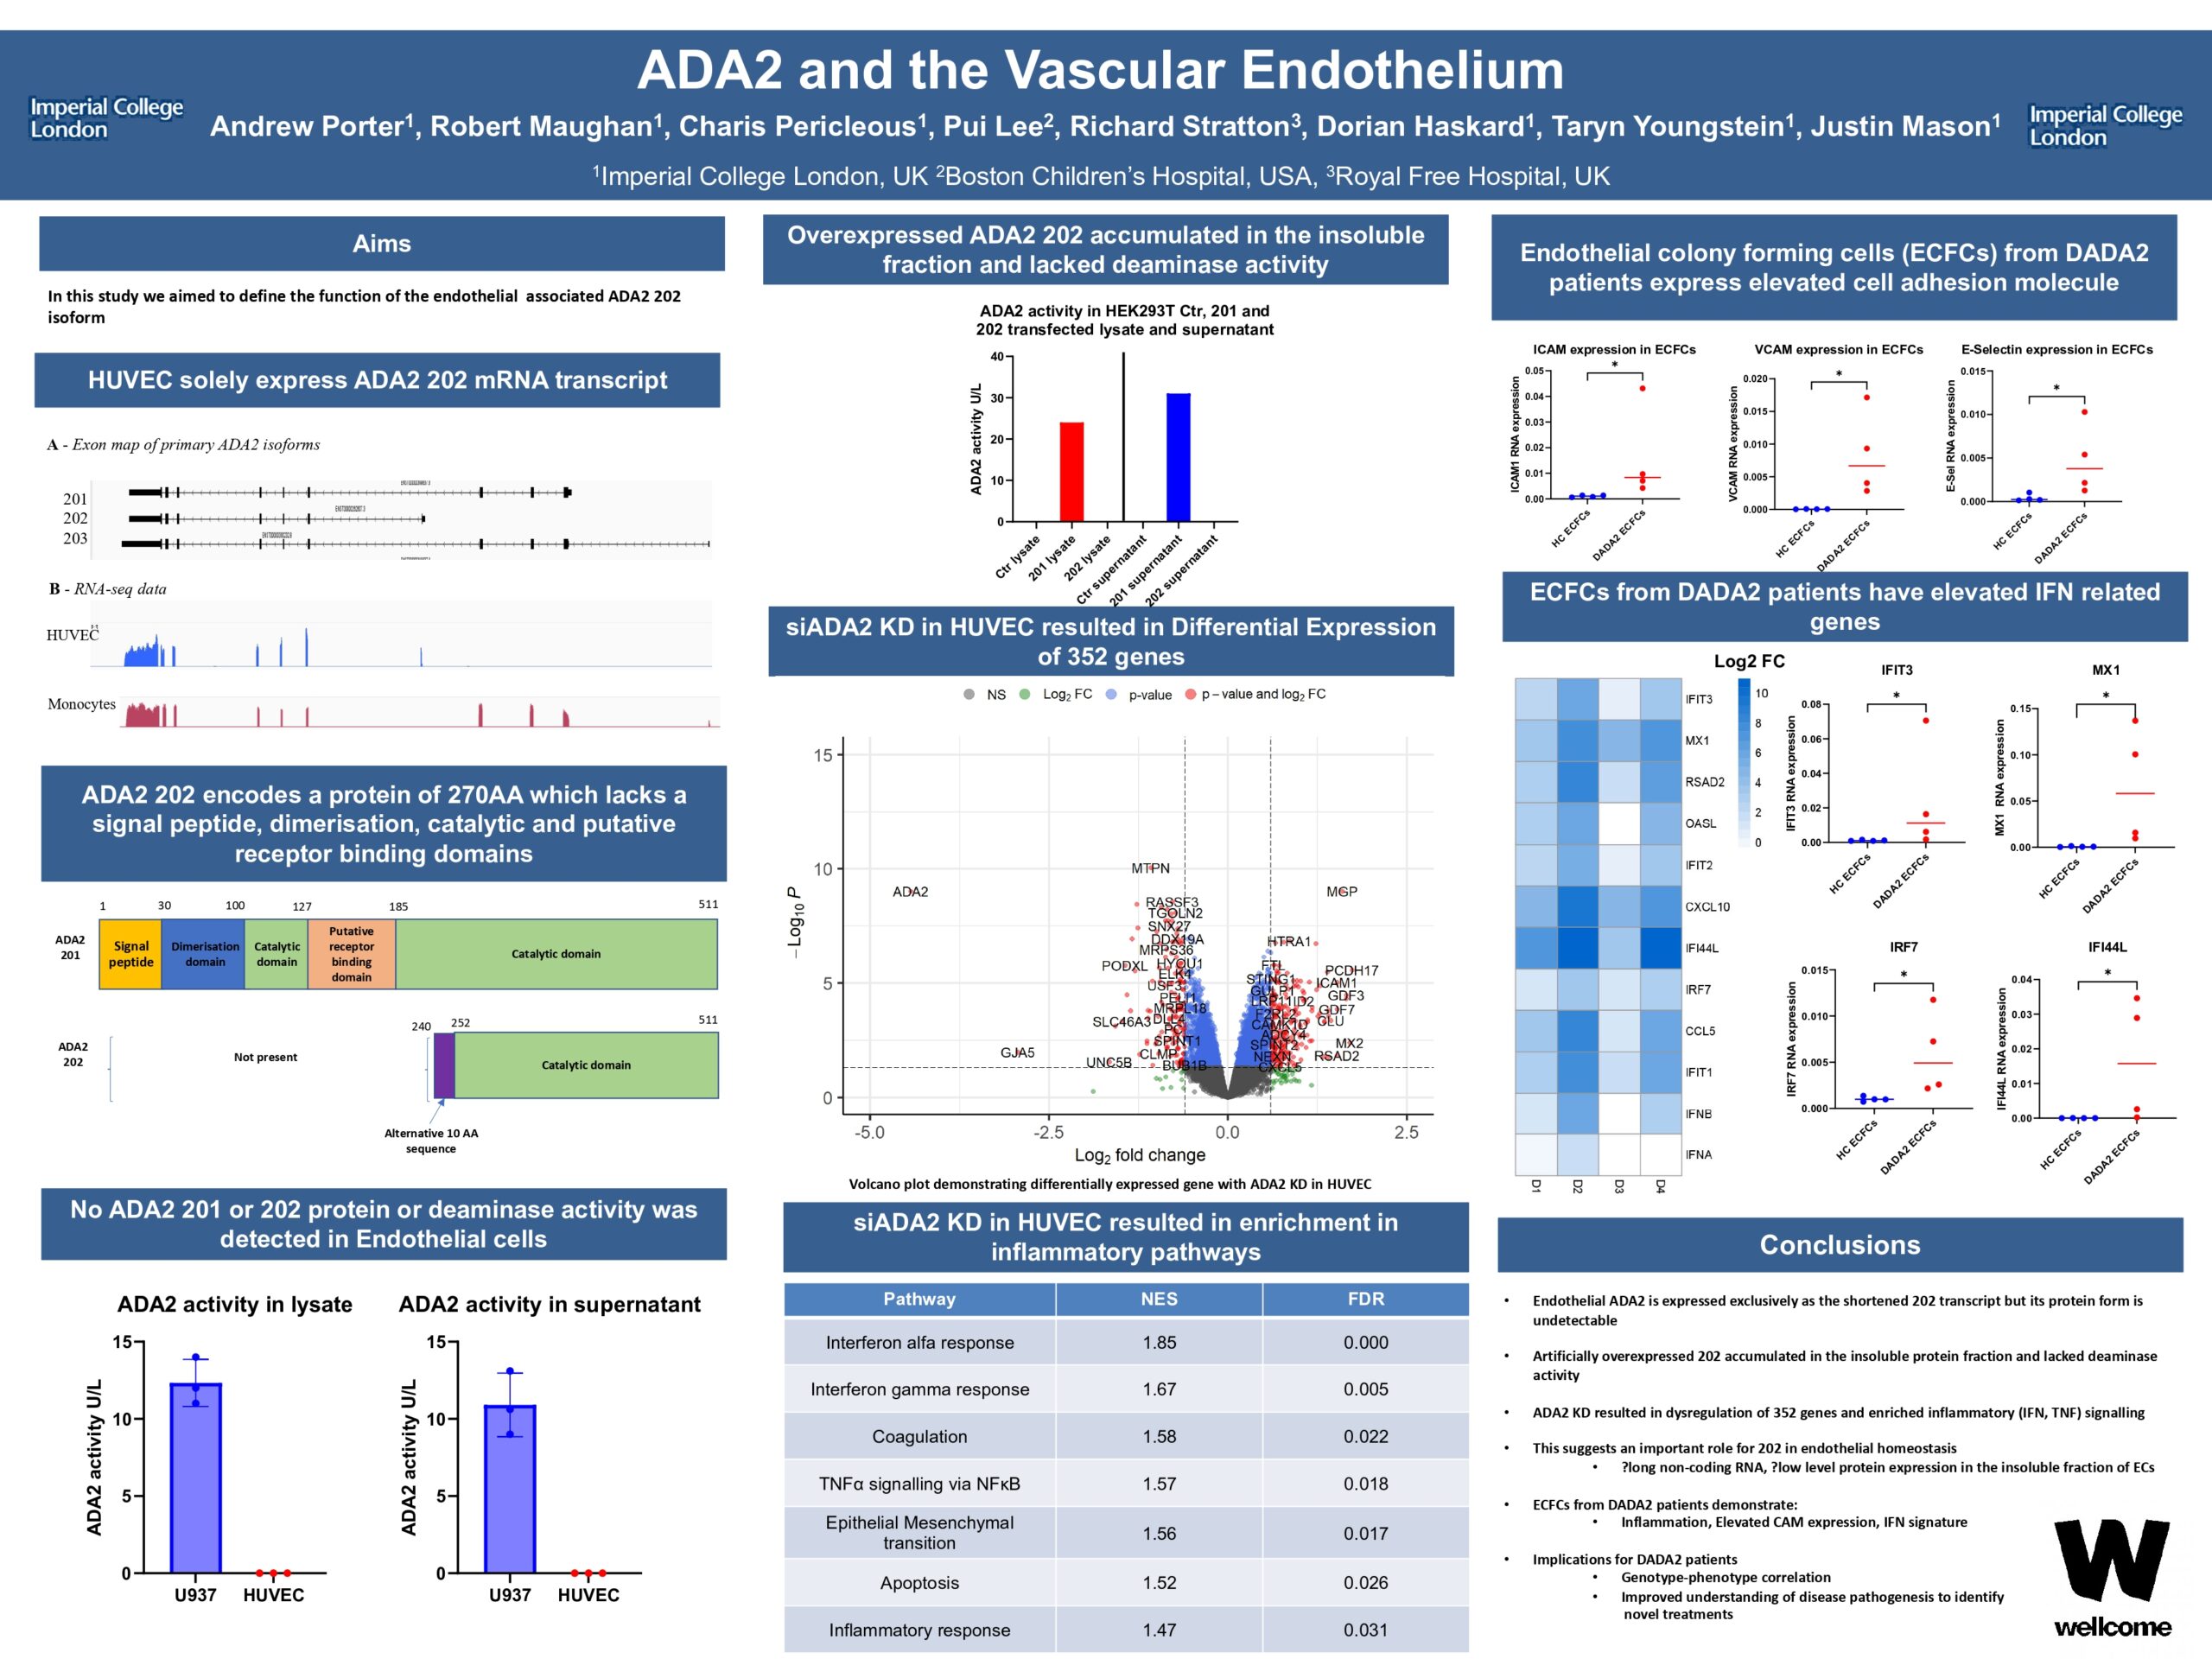 Andrew Porter - ADA2 and the Vascular Endothelium